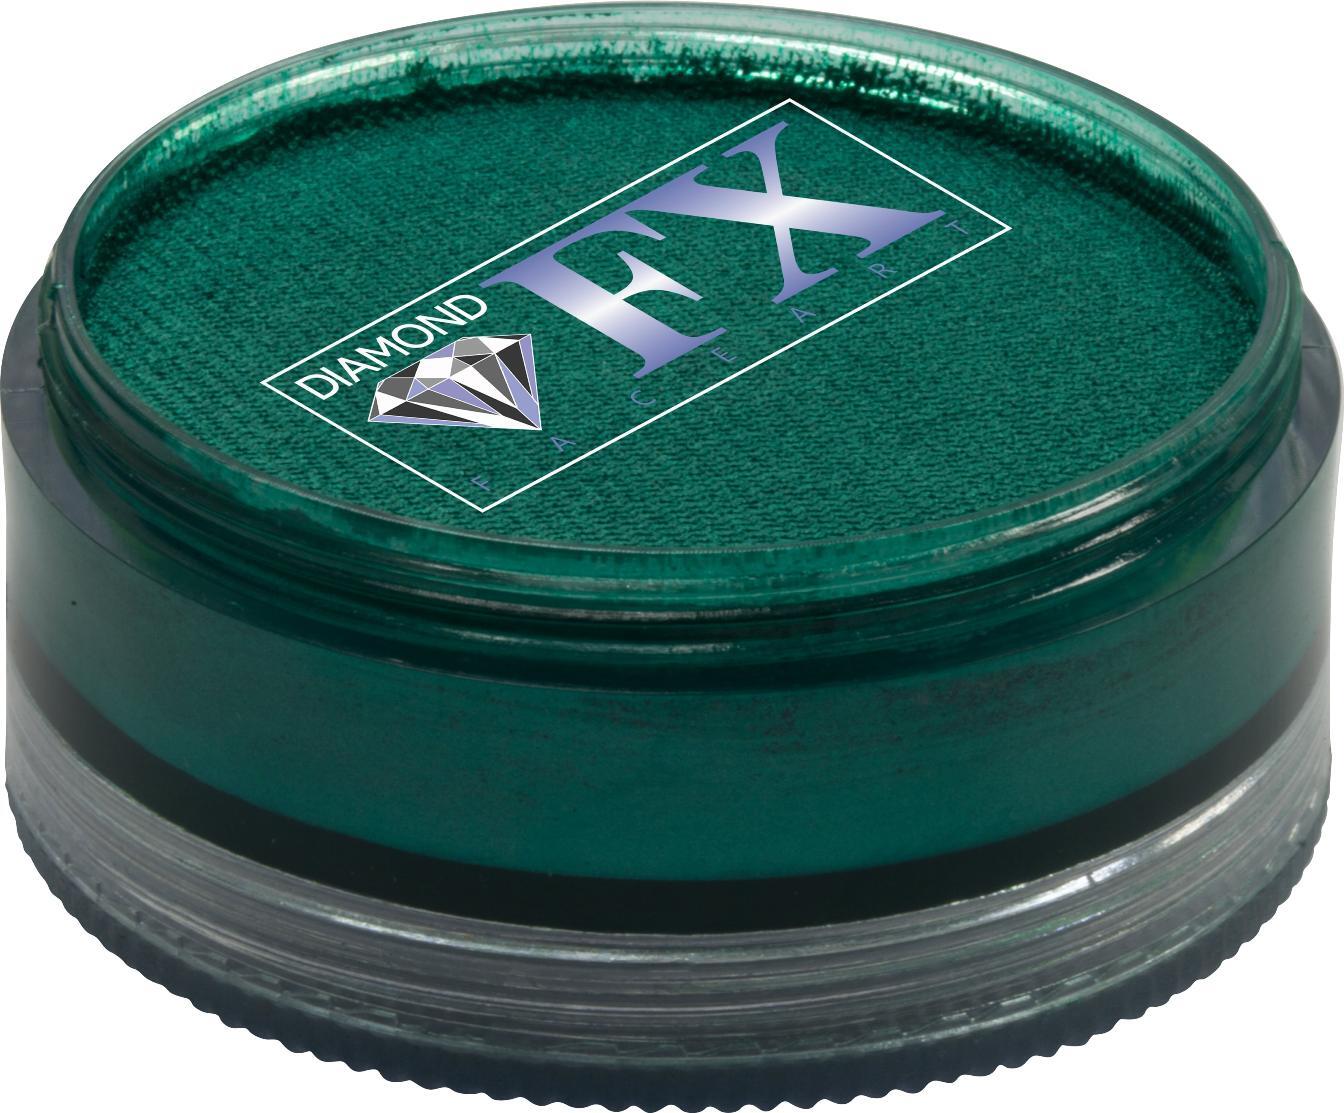 Diamond FX Green Metallic 90g - Small Image